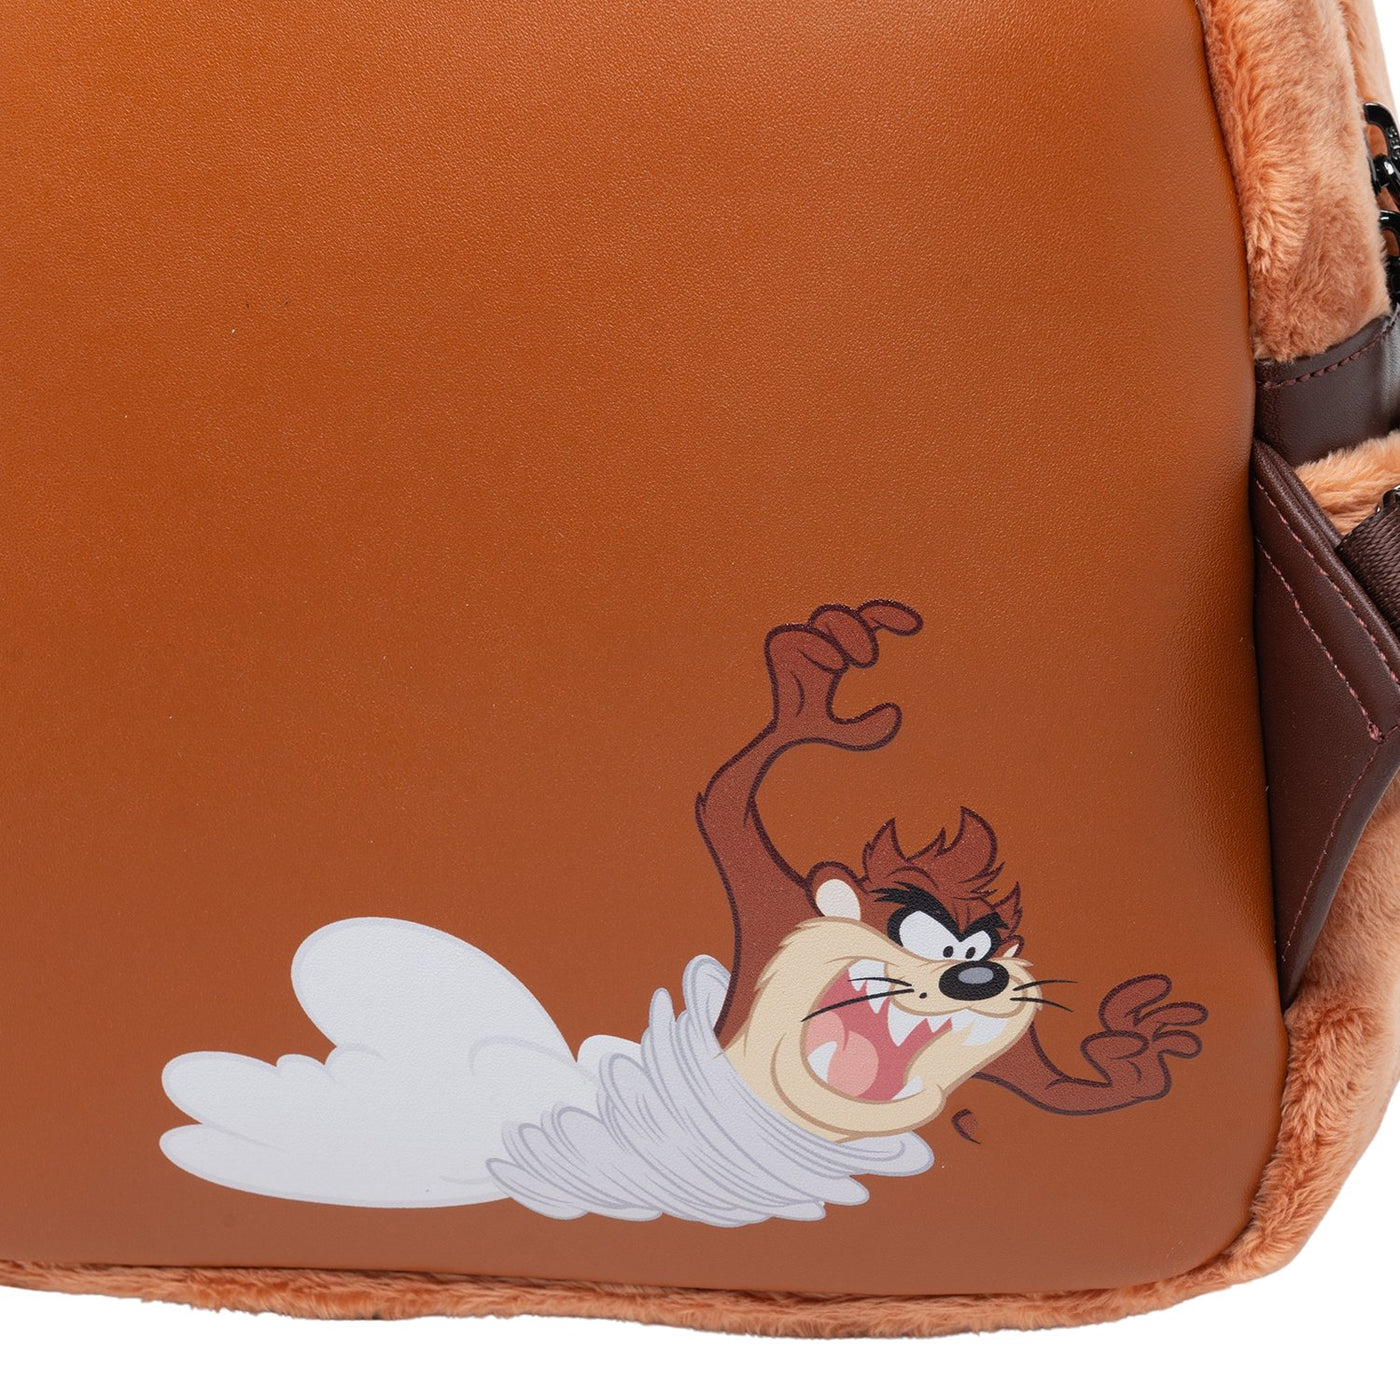 707 Street Exclusive - Loungefly Warner Brothers Looney Tunes Tasmanian Devil Plush Cosplay Mini Backpack - Back Closeup